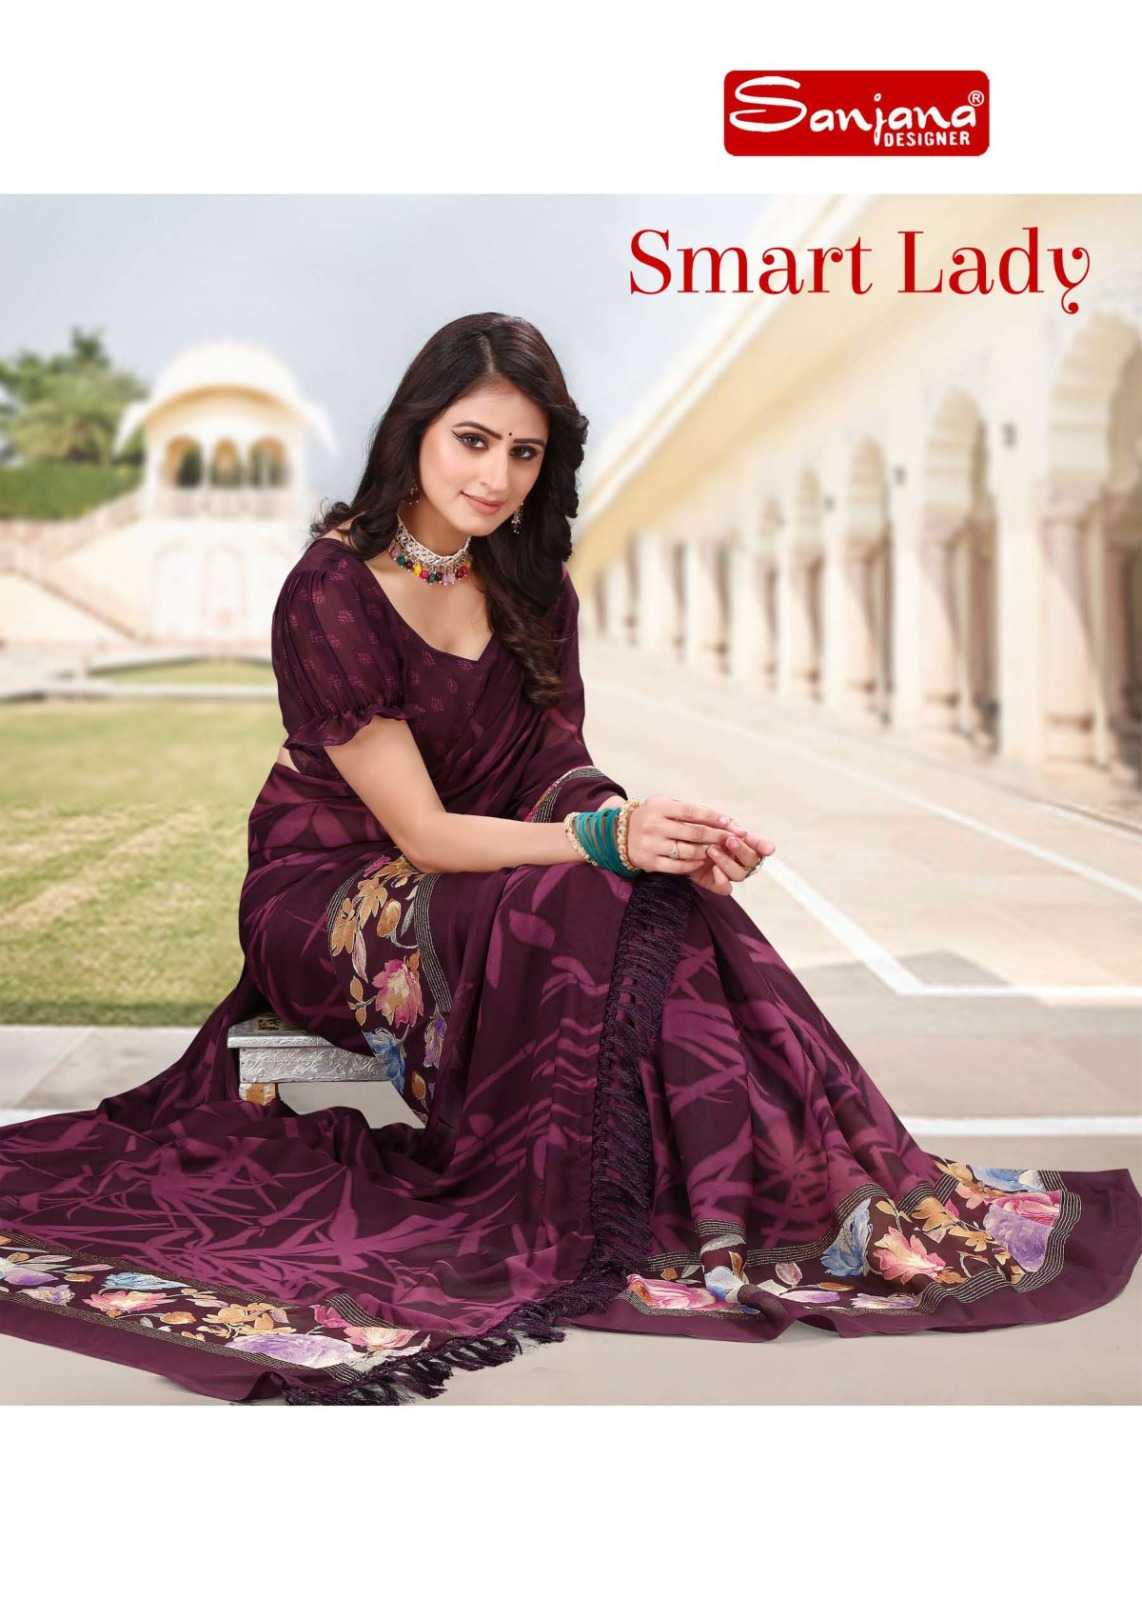 sanjana designer smart lady adorable fancy weightless sarees supplier